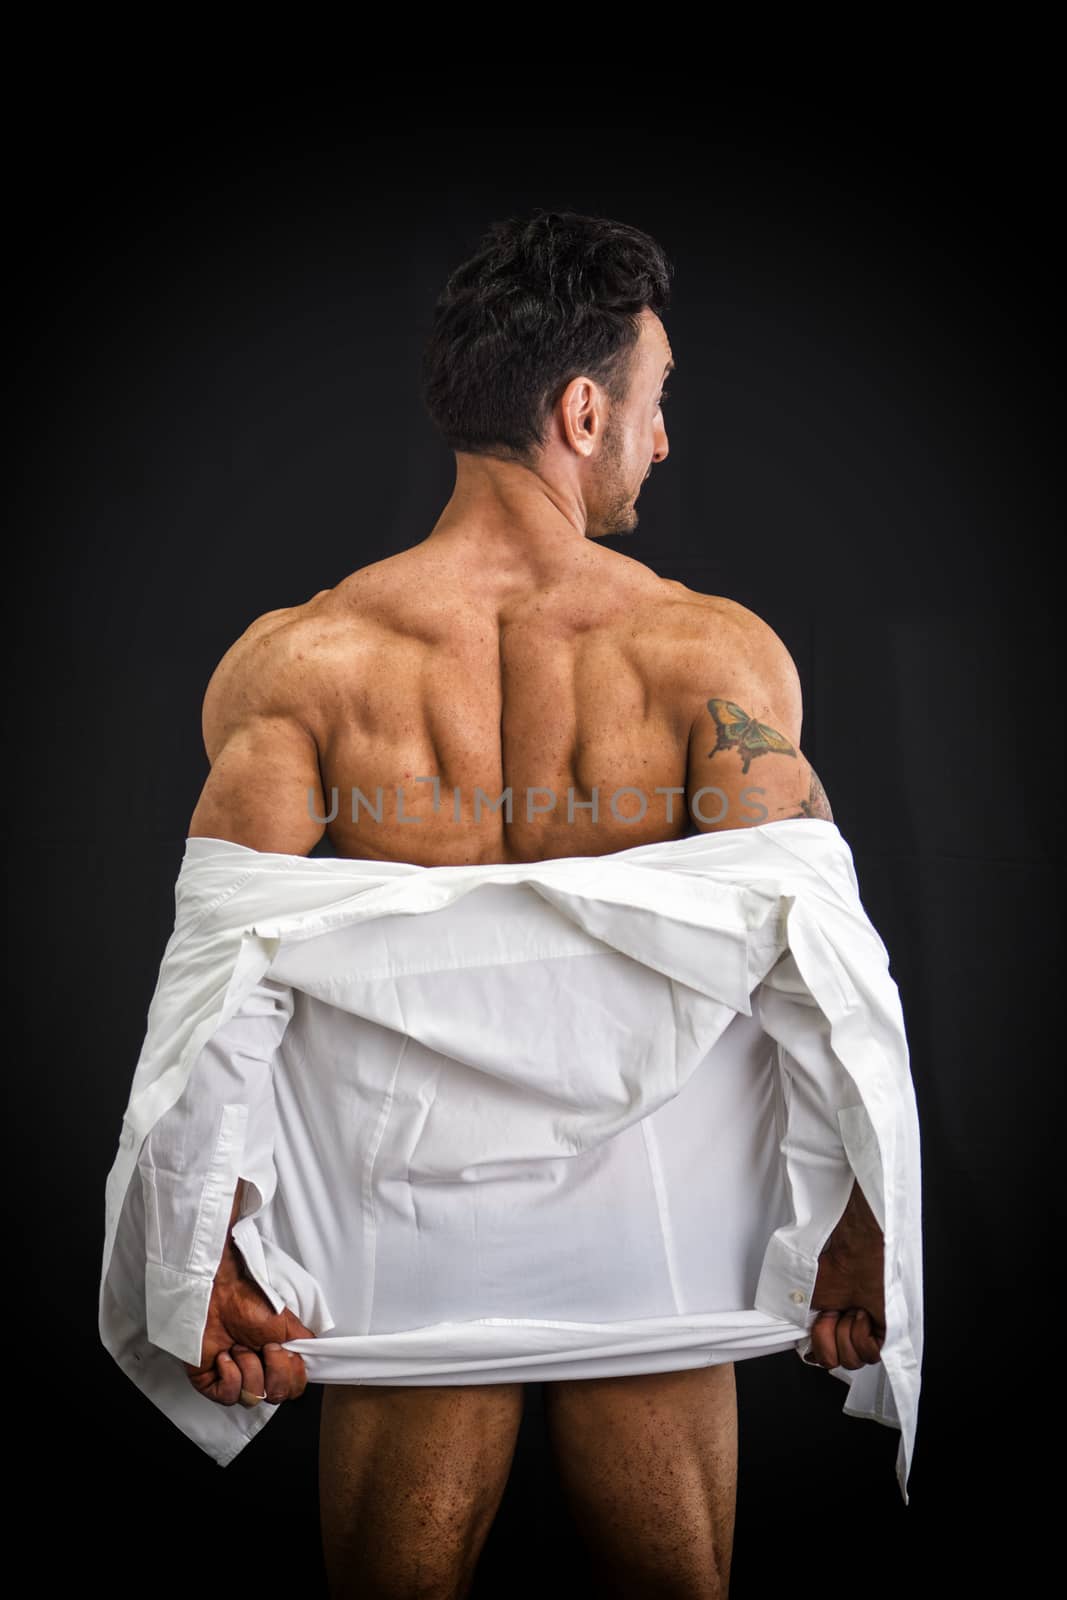 Male bodybuilder undressing revealing muscular back and shoulders, on dark background